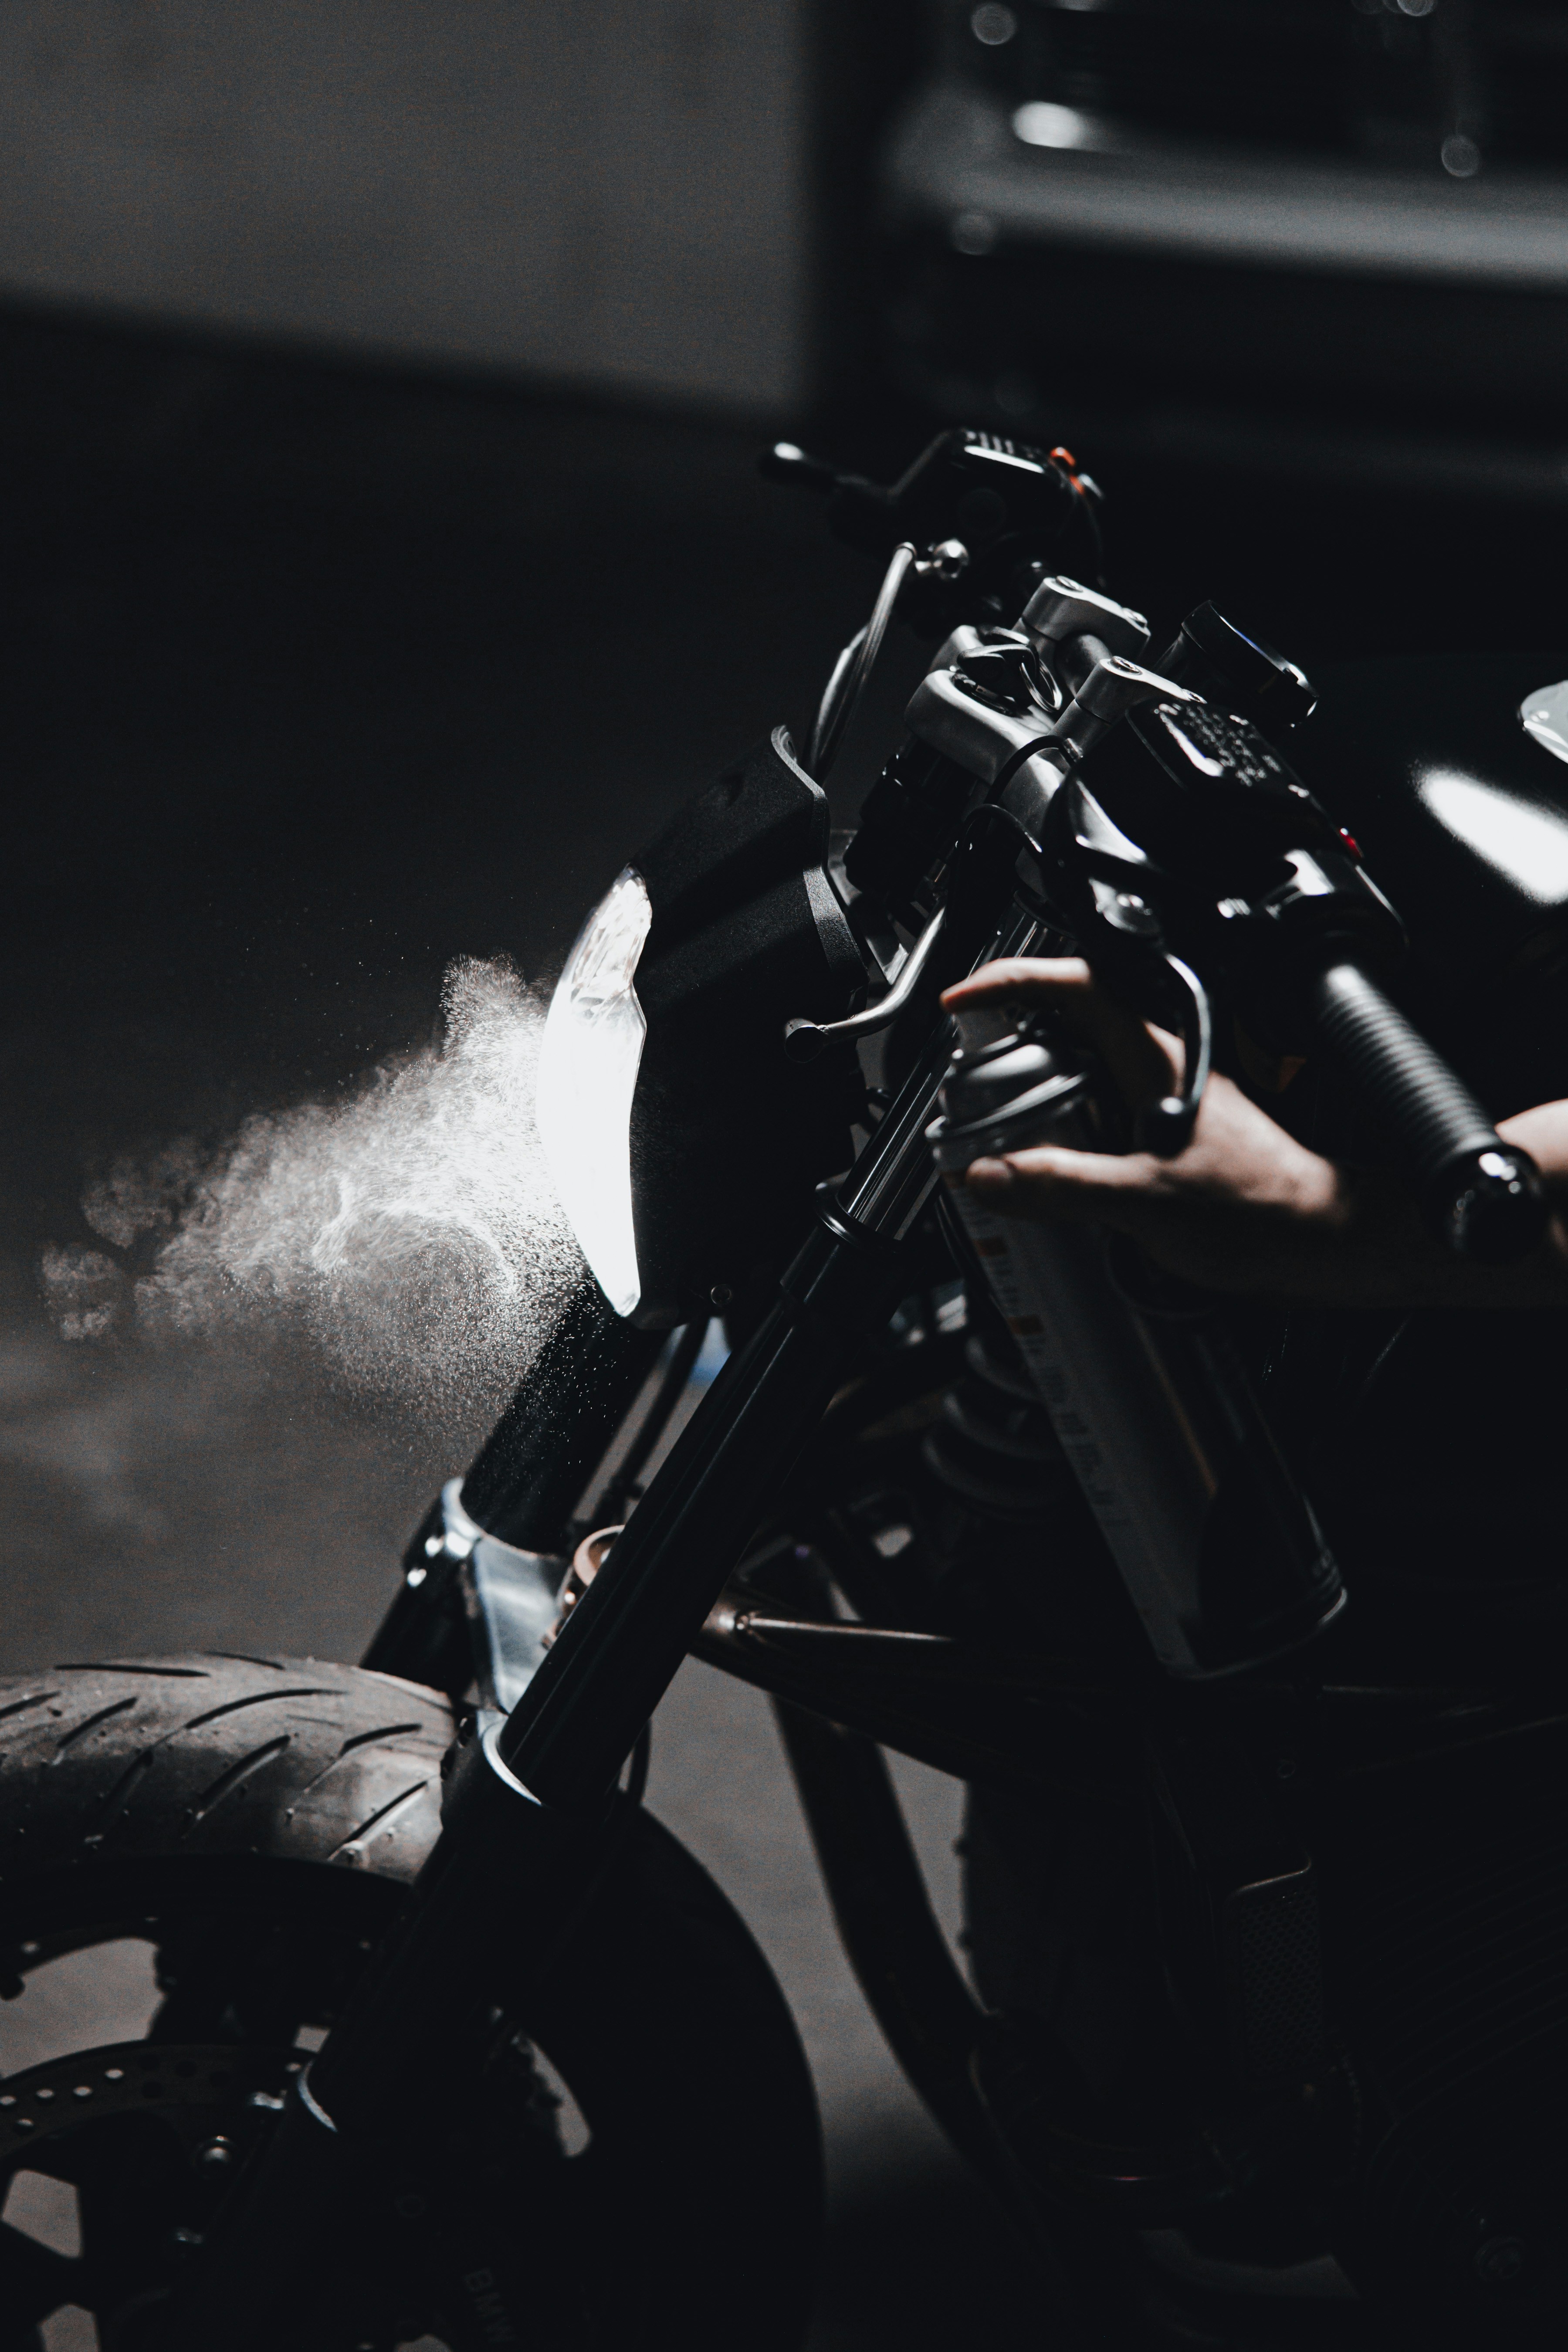 black-motorcycle-with-white-smoke